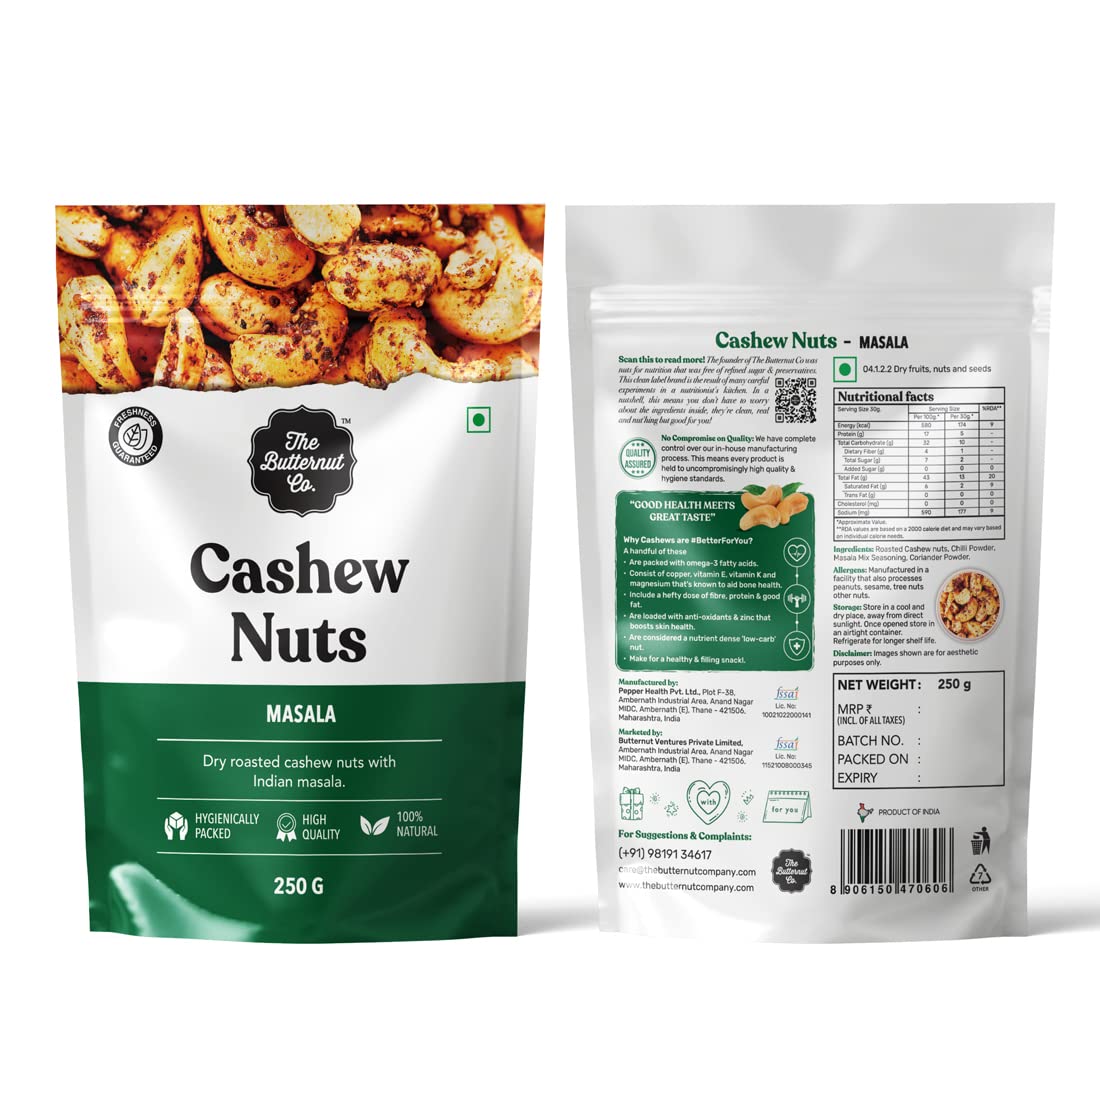 The Butternut Co. Cashew Nuts Masala - 250gm| 100% Natural | High Protein & Fibre | Gluten Free | Vegan